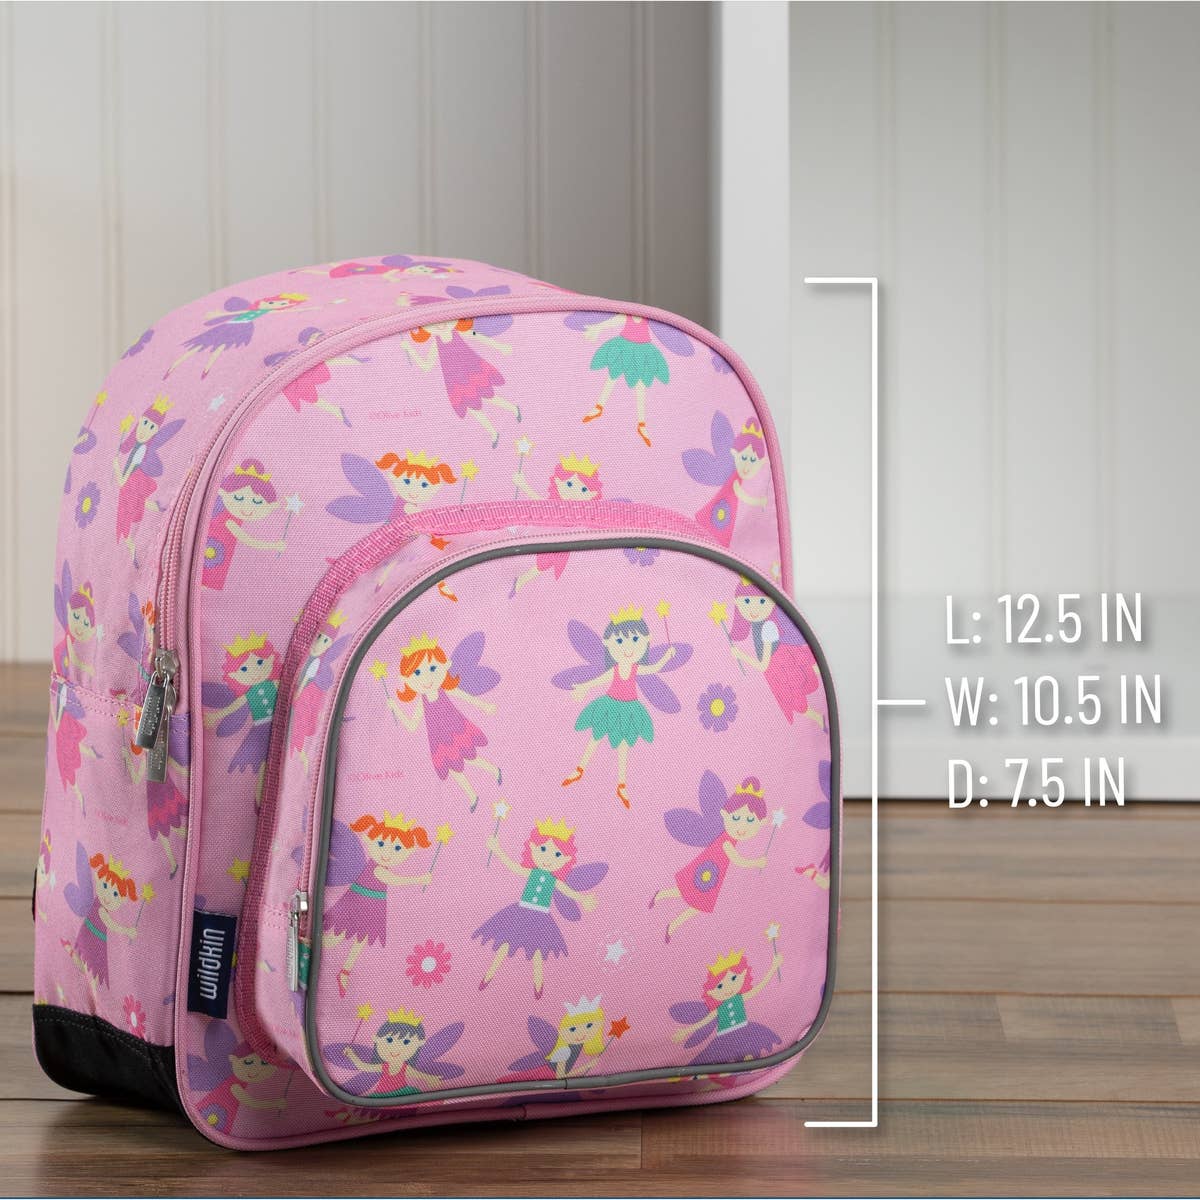 Wildkin 12 inch Backpack - Fairy Princess